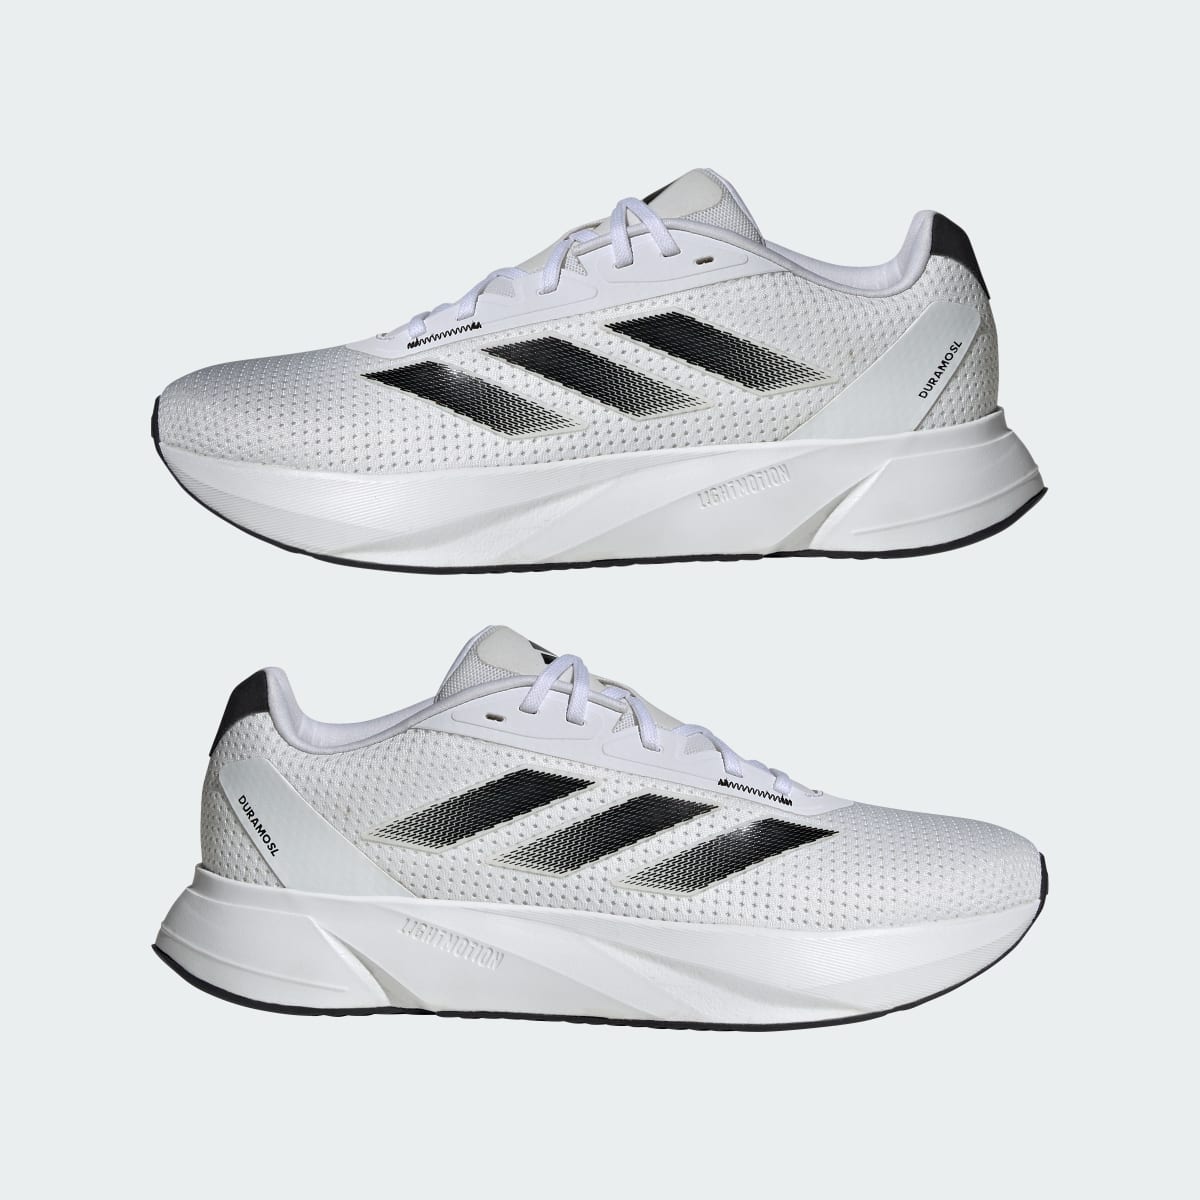 Adidas Duramo SL Shoes. 8